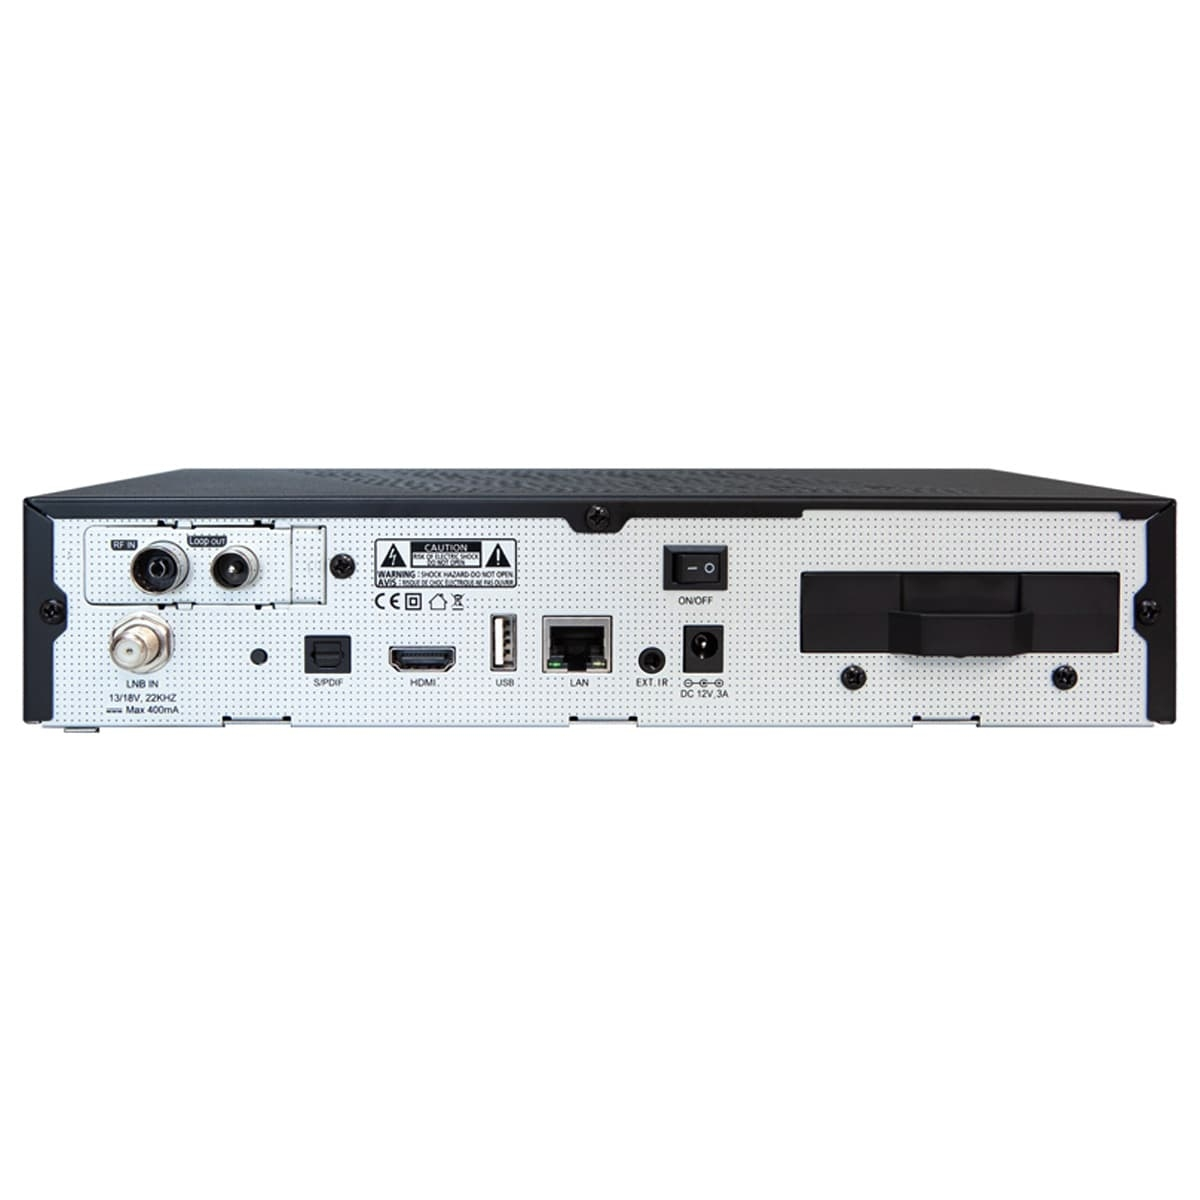 DVB-C/T2 4TB (PVR-Funktion, 4K Combo Sat-Receiver Tuner, Schwarz) Twin DVB-S2X PULSe AB-COM